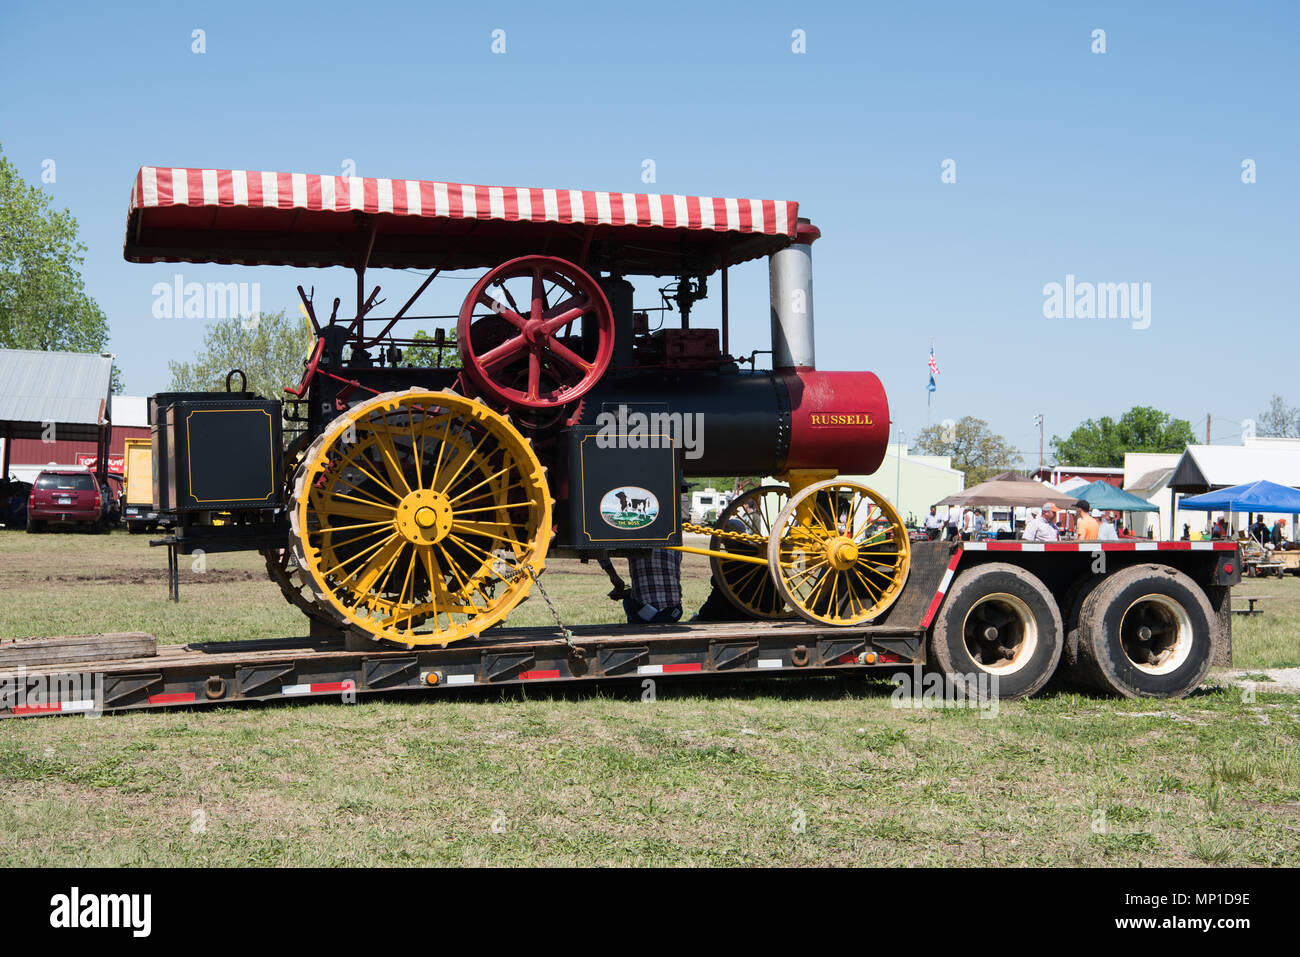 Antic steam engine tractor Stock Photo